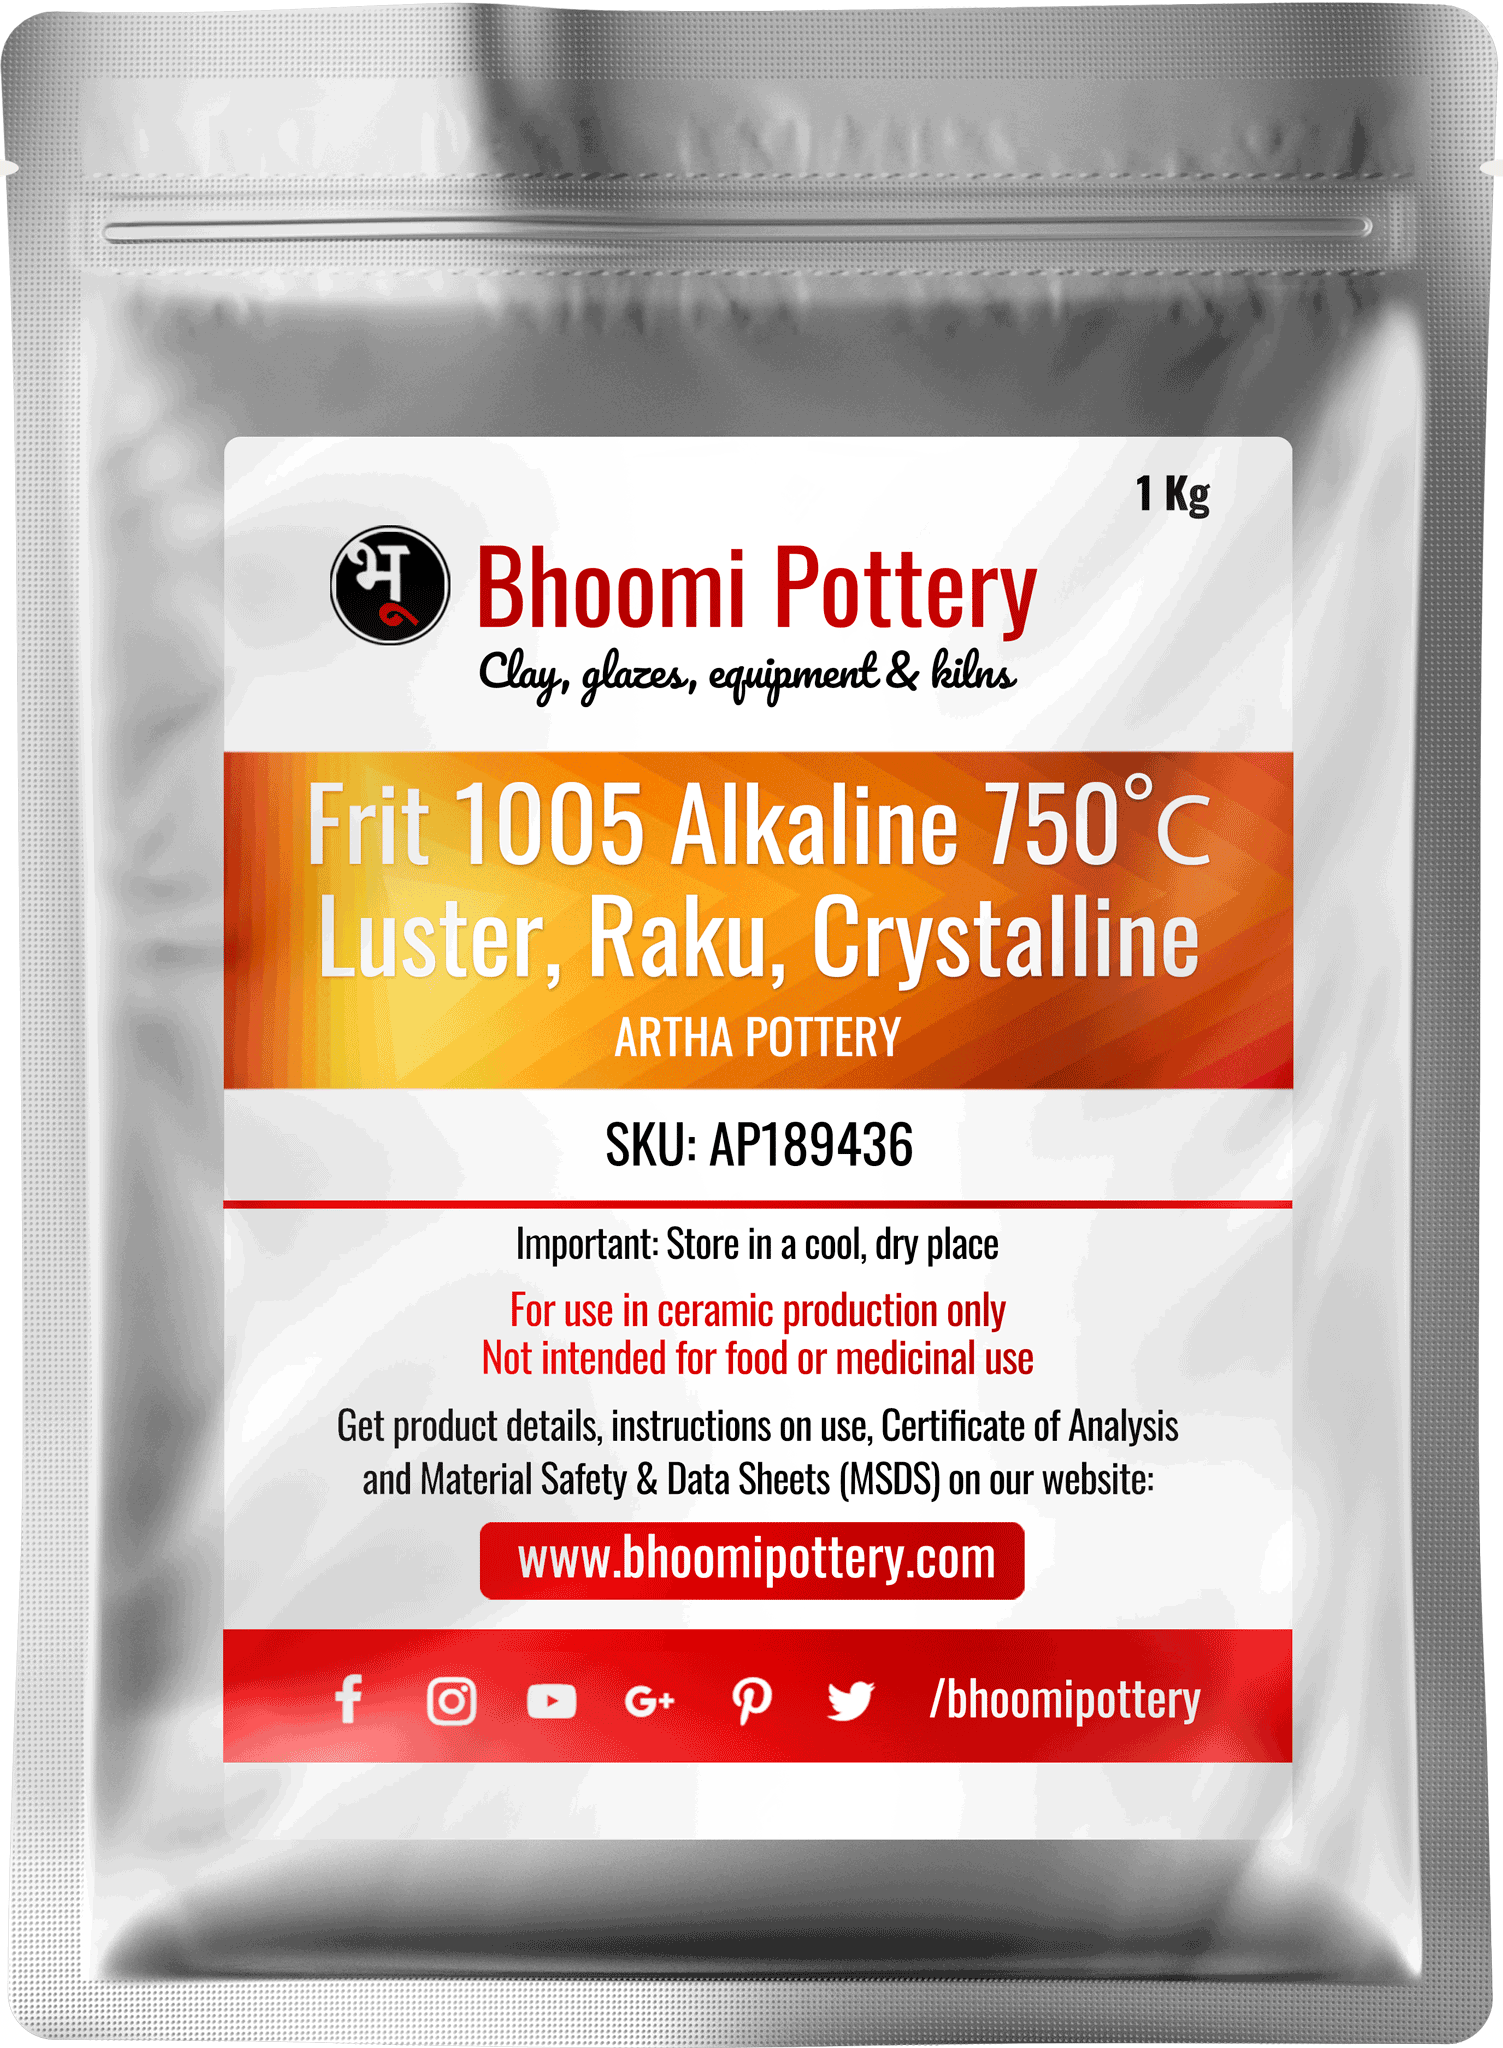 Artha Pottery Frit 1005 Alkaline 750C. Luster, Raku, Crystalline 1 kg for sale in India - Bhoomi Pottery